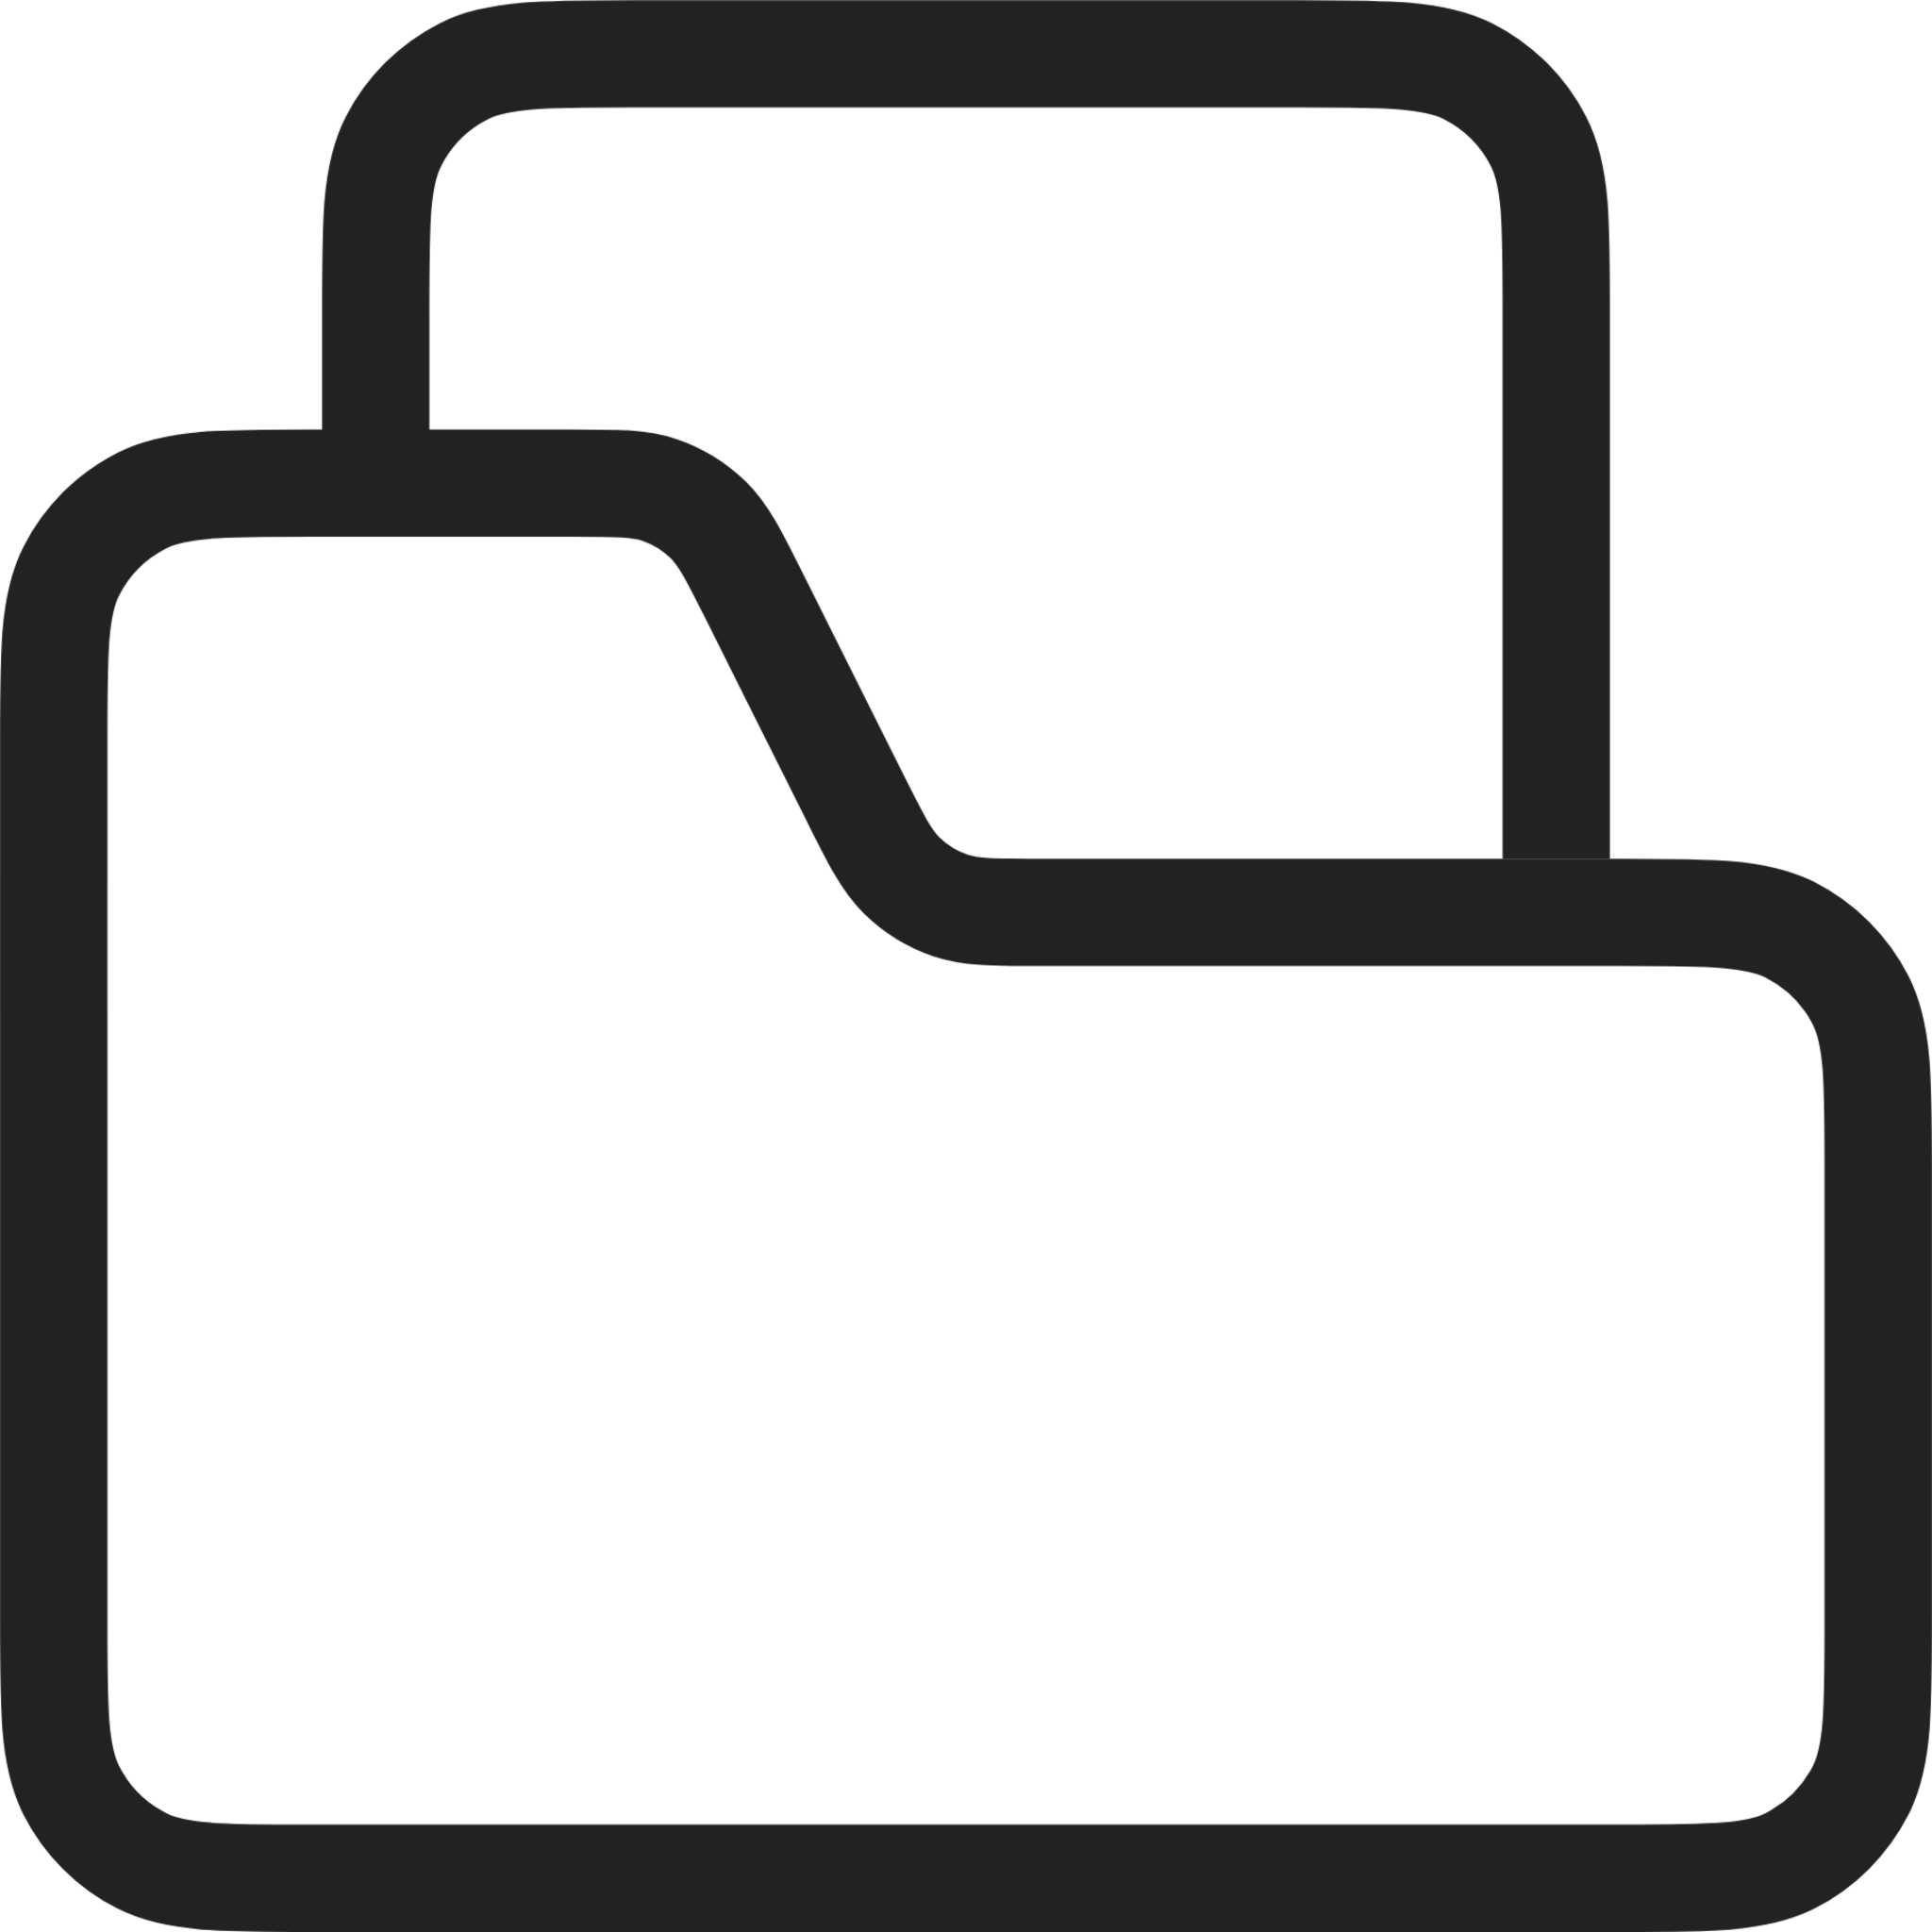 Folder file light icon